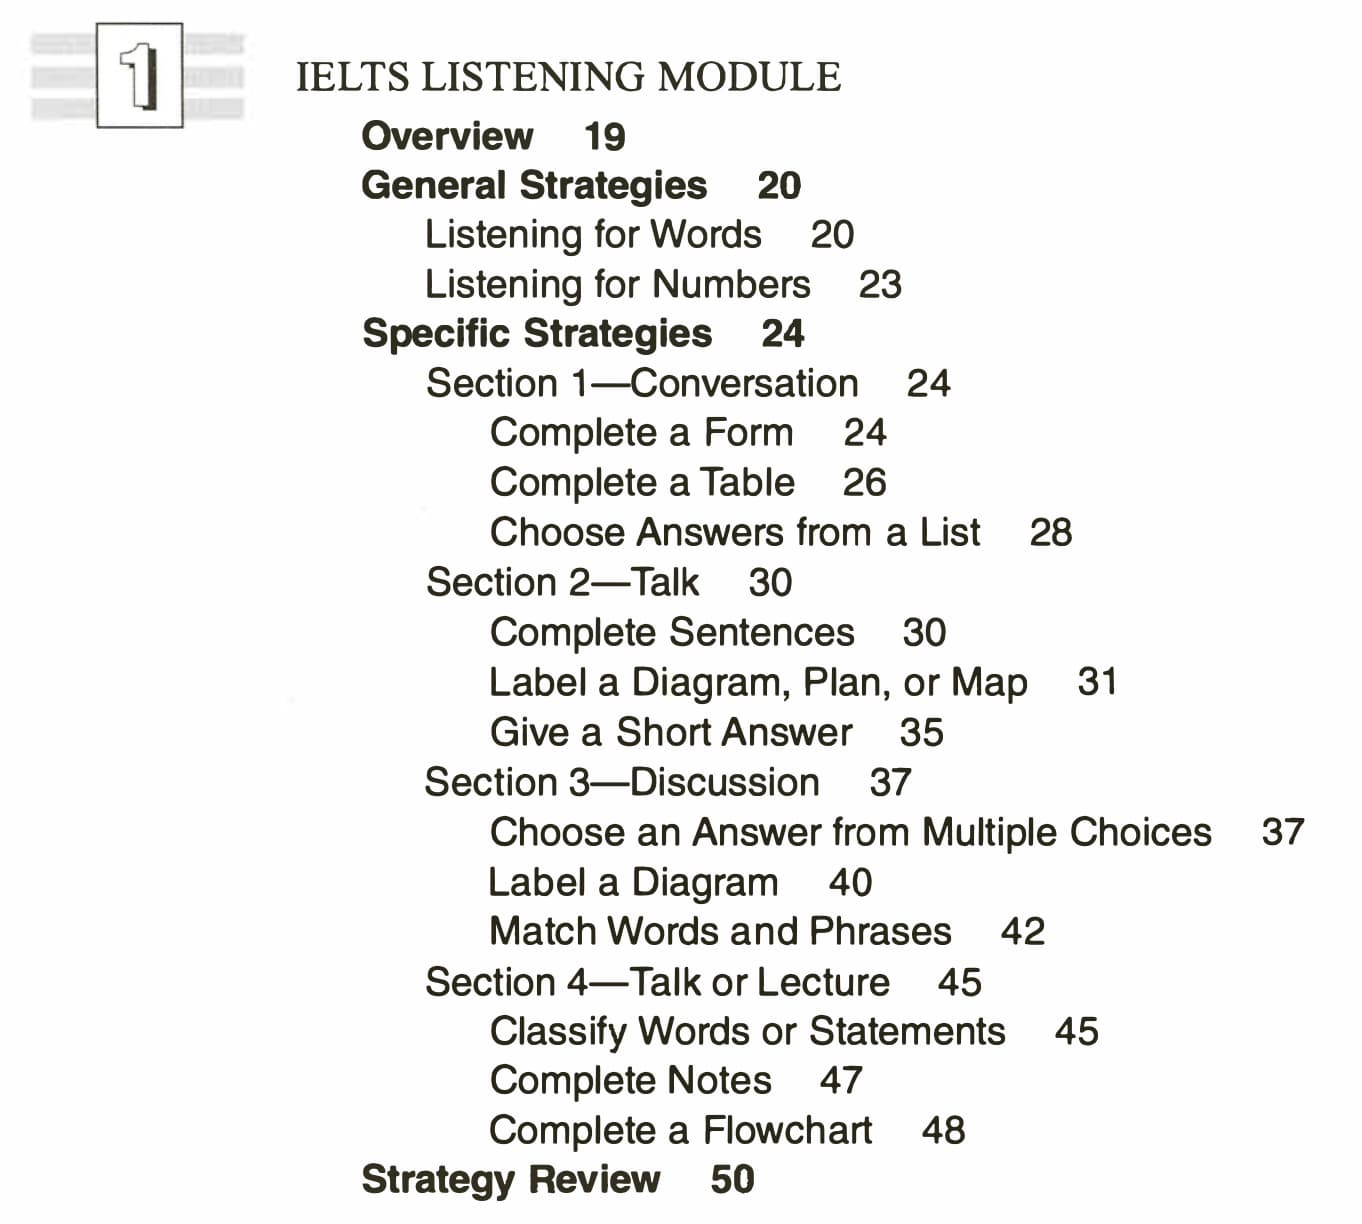 Barron's IELTS Strategies and Tips - Listening moduel